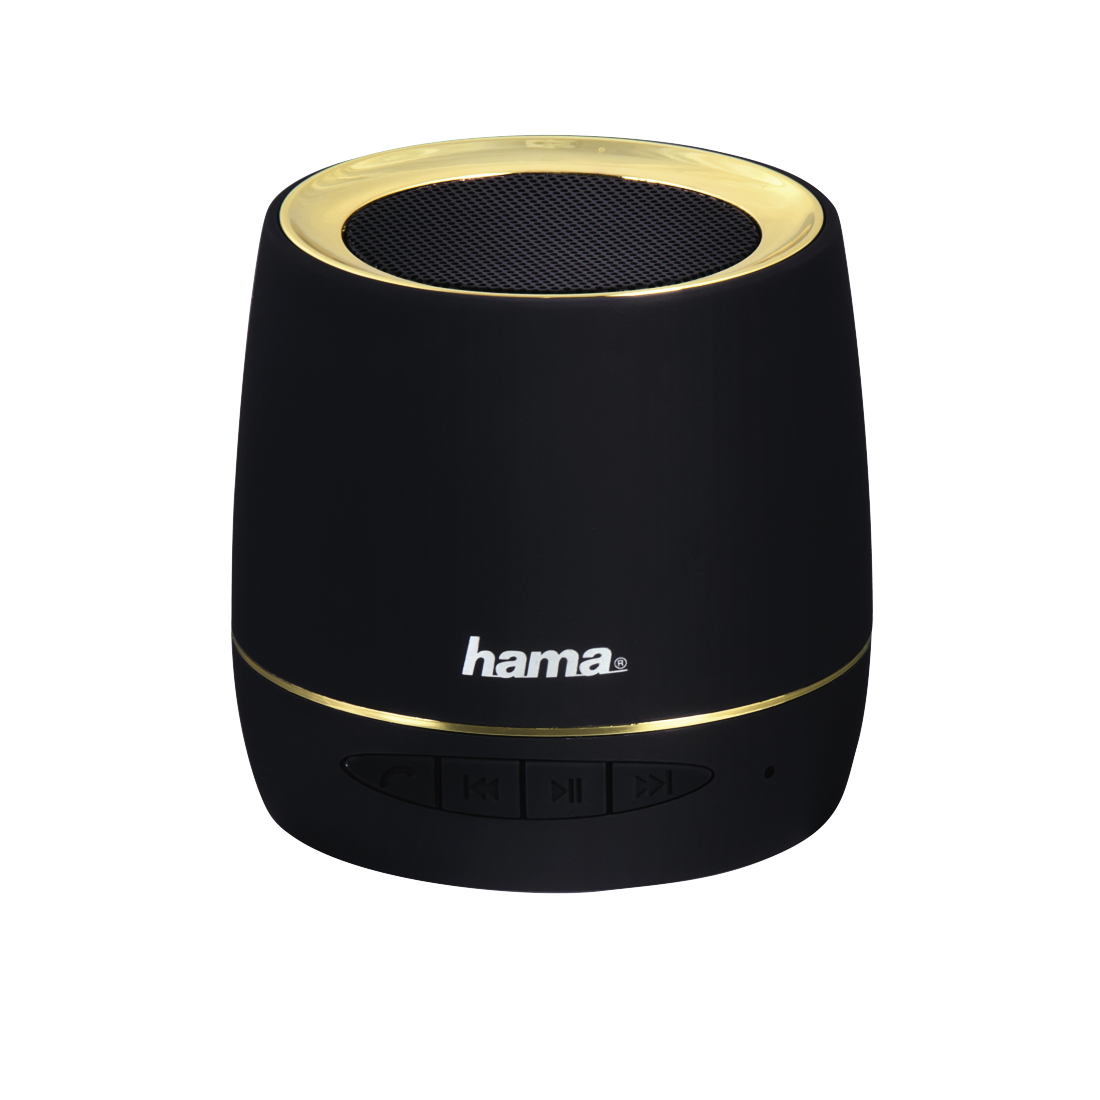 Hama Bluetooth Sphere Black/Gold (001244840000) | Audio, Online Video | TV, HiFi | shop Audio